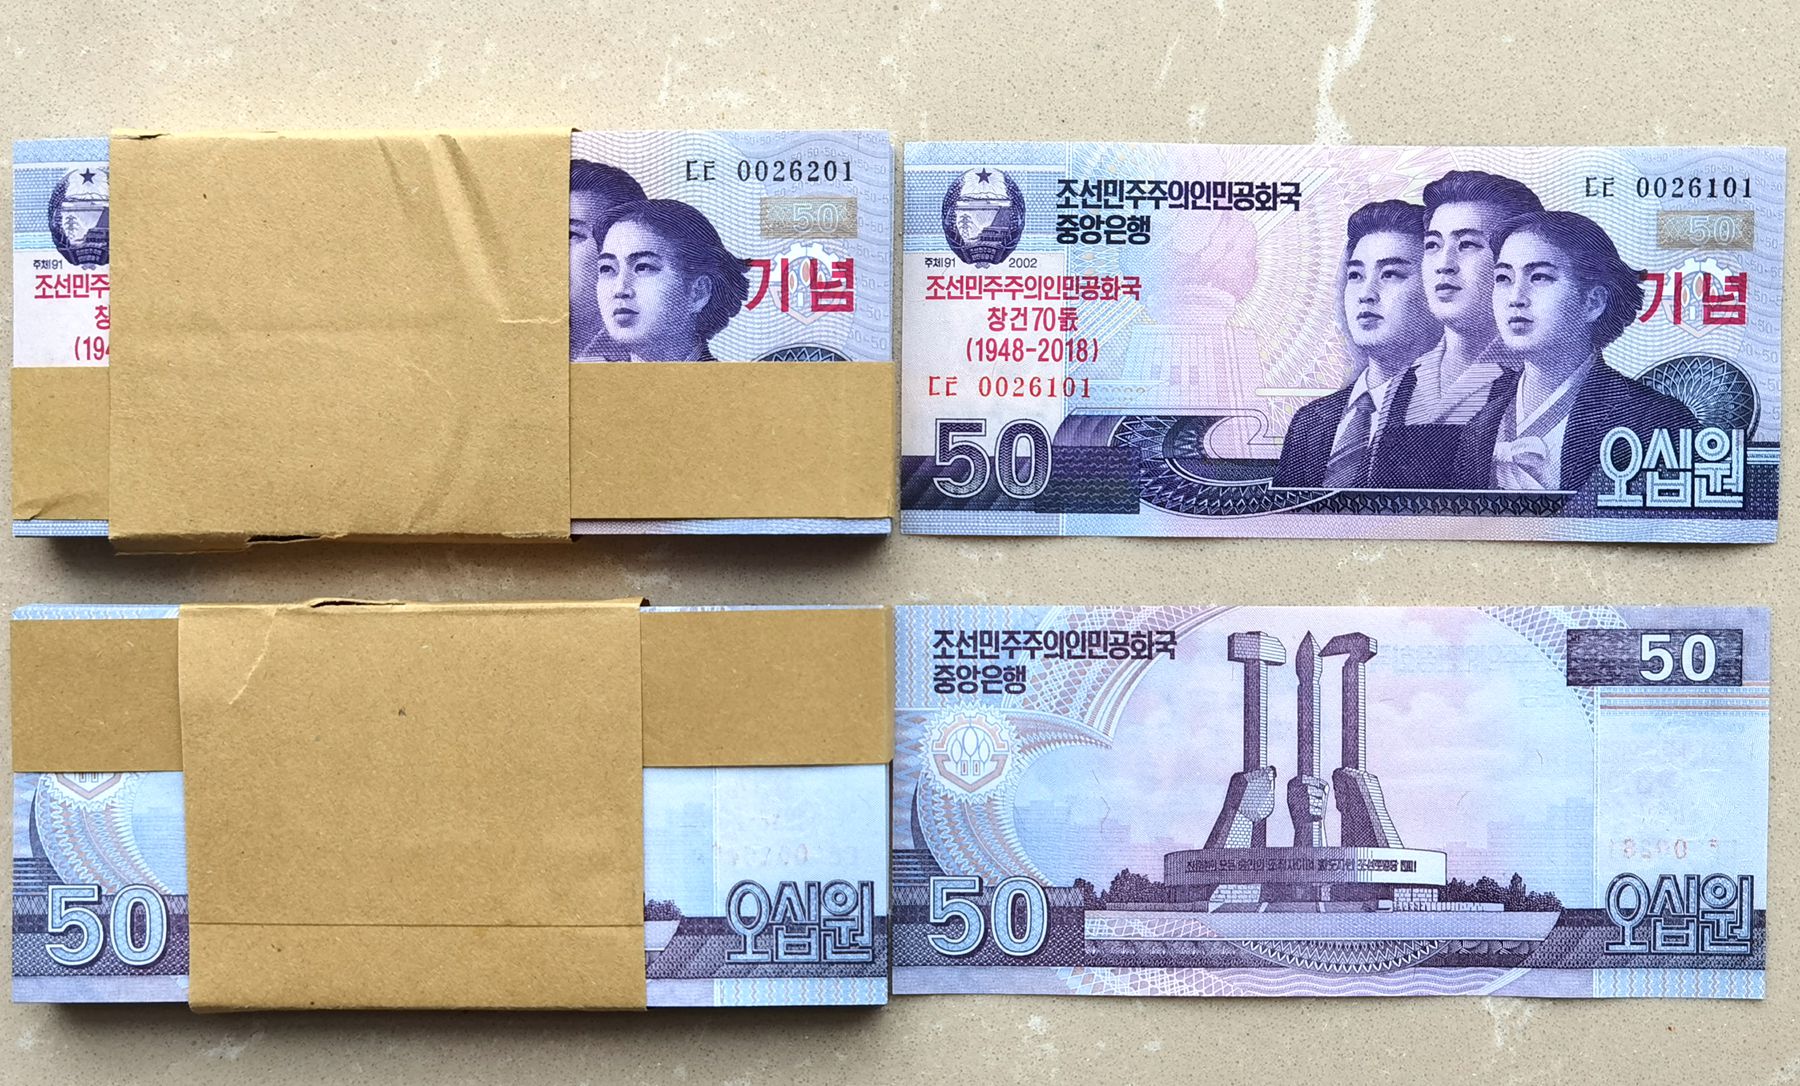 L1177, 100 Pcs, KOREA 50 Won Banknote Bundle, 2018 Overprint